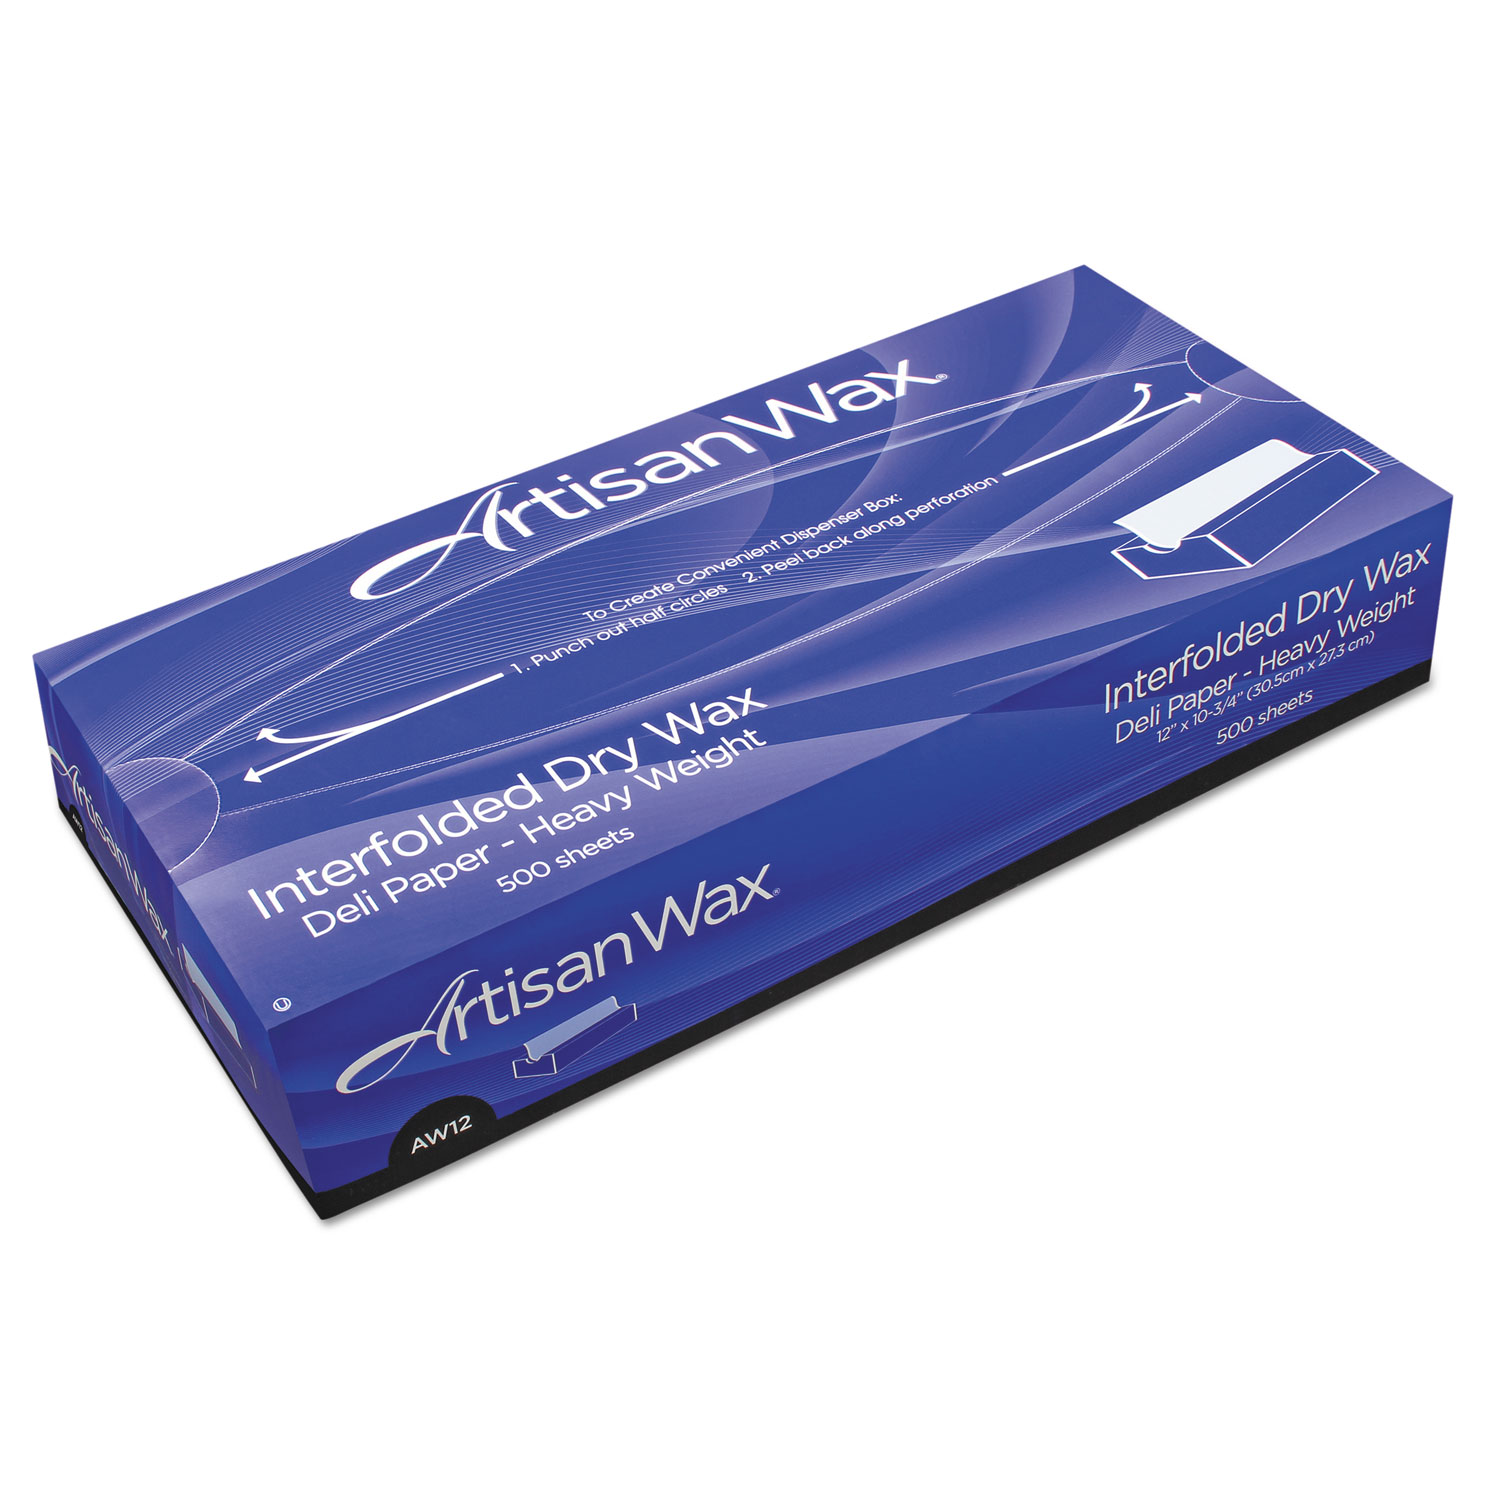  Bagcraft P012008 Dry Wax Paper, 8 x 10 3/4, White, 500/Box, 12 Box/Carton (BGC012008) 